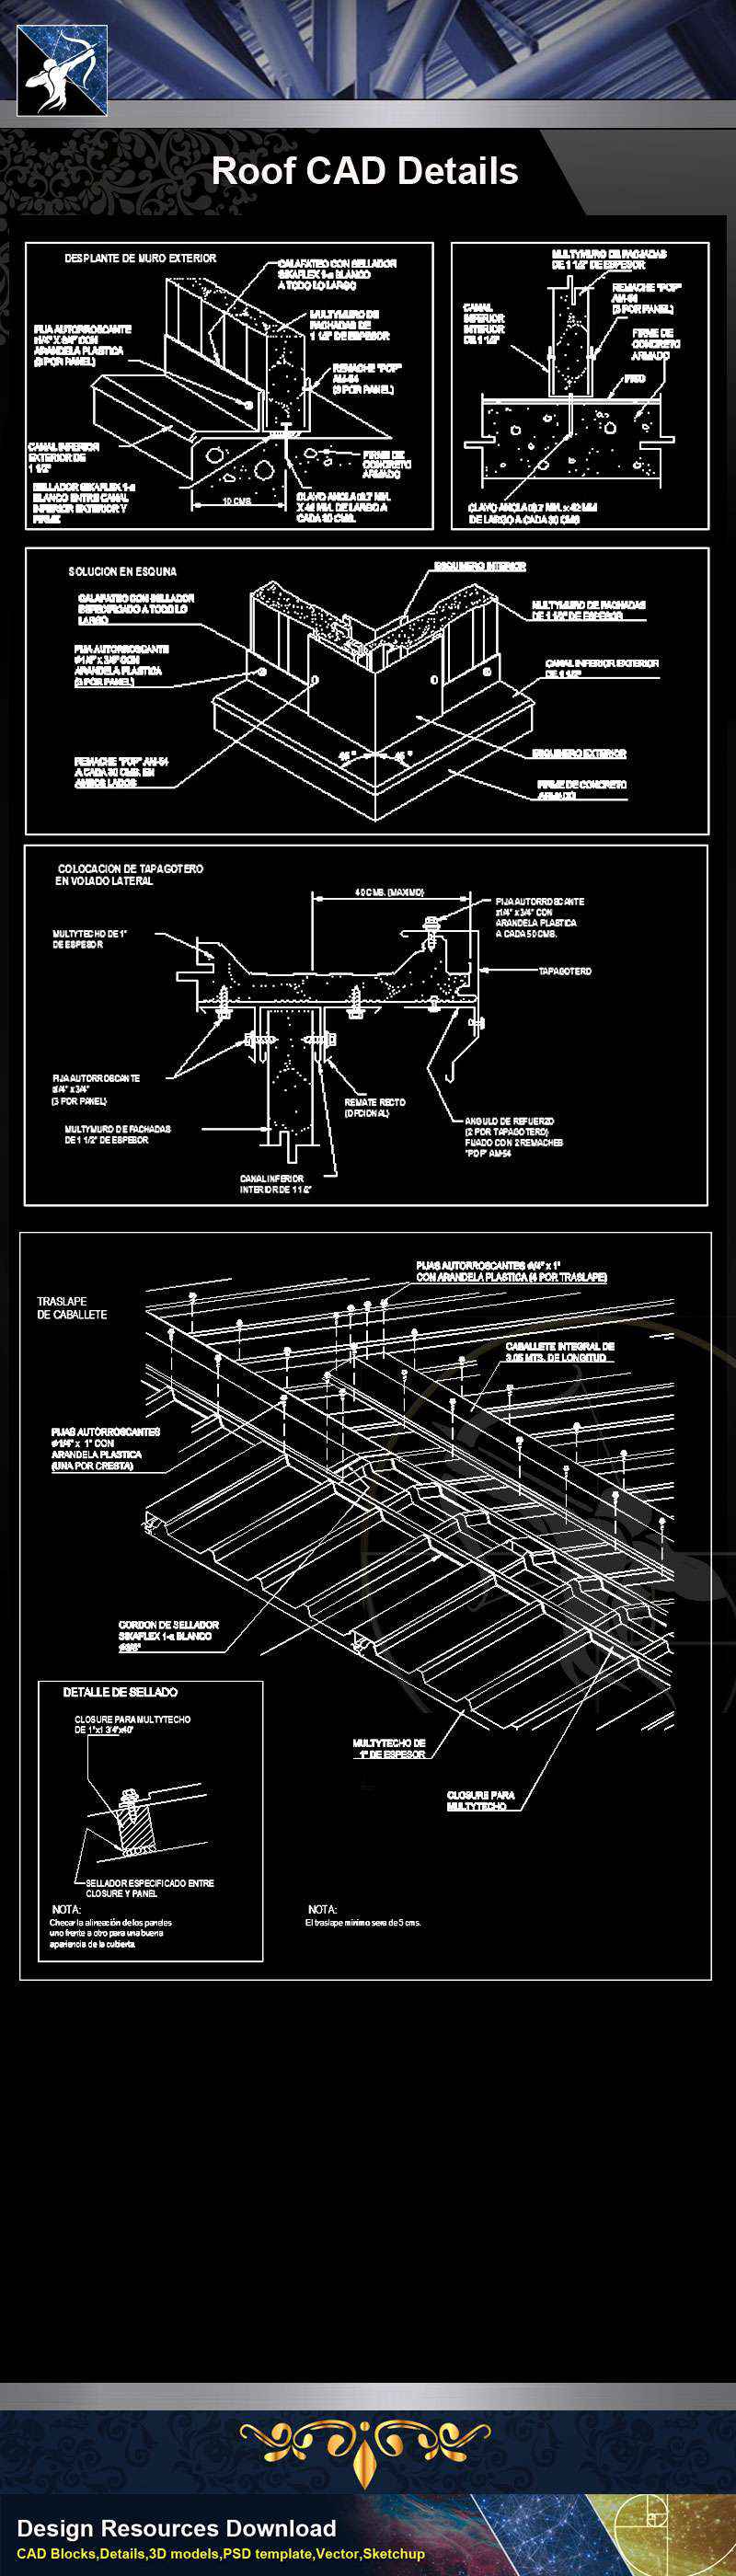 【Architecture CAD Details Collections】Roof CAD Details V.2